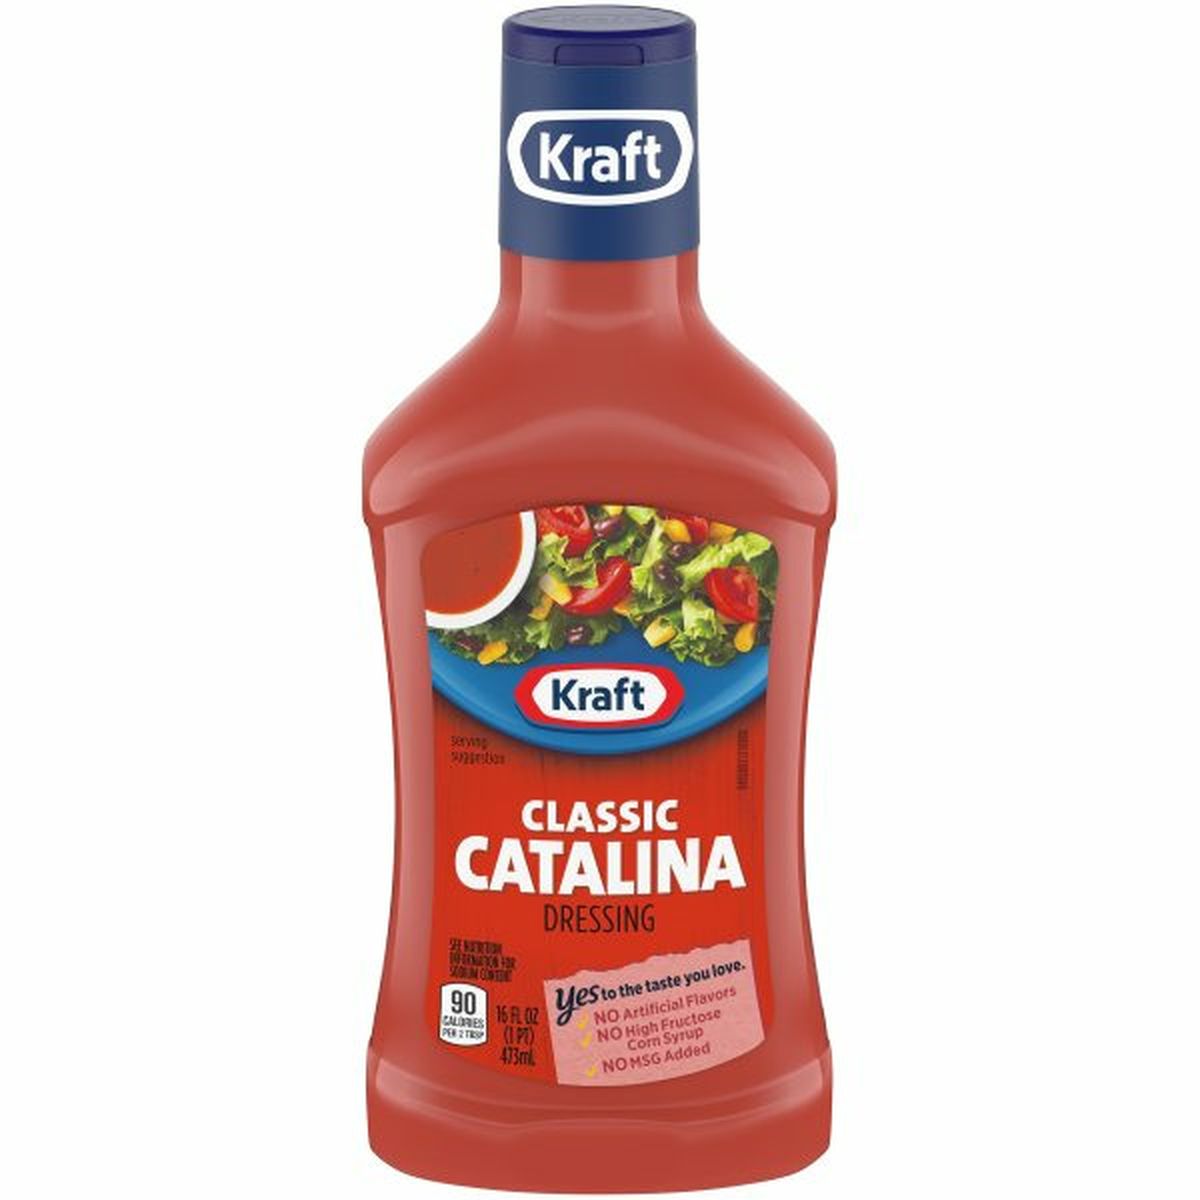 Calories in Kraft Classic Catalina Dressing